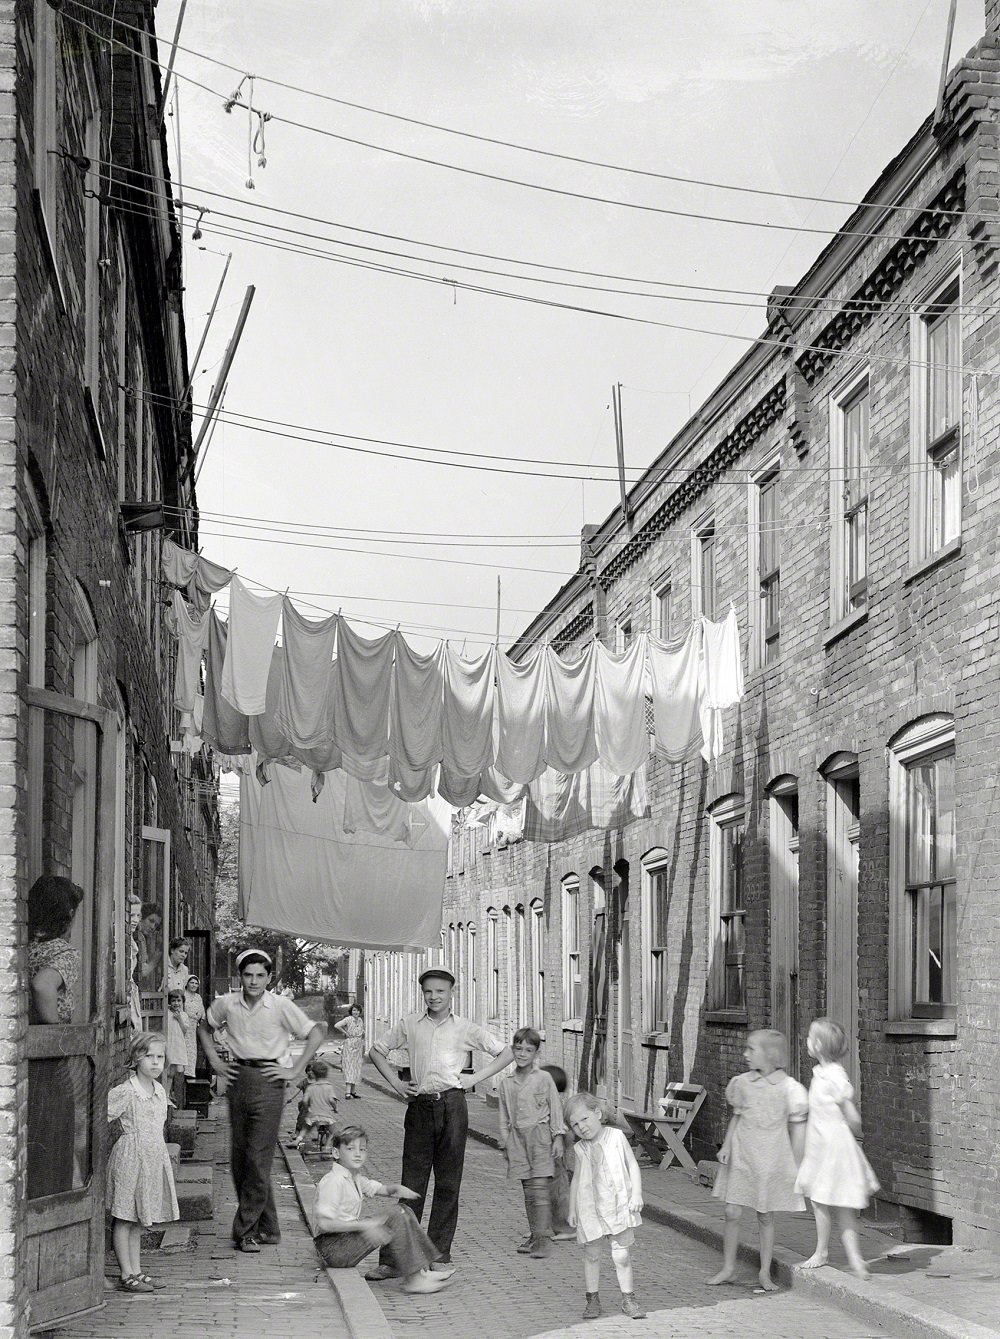 Housing conditions in Ambridge, Pennsylvania, July 1938